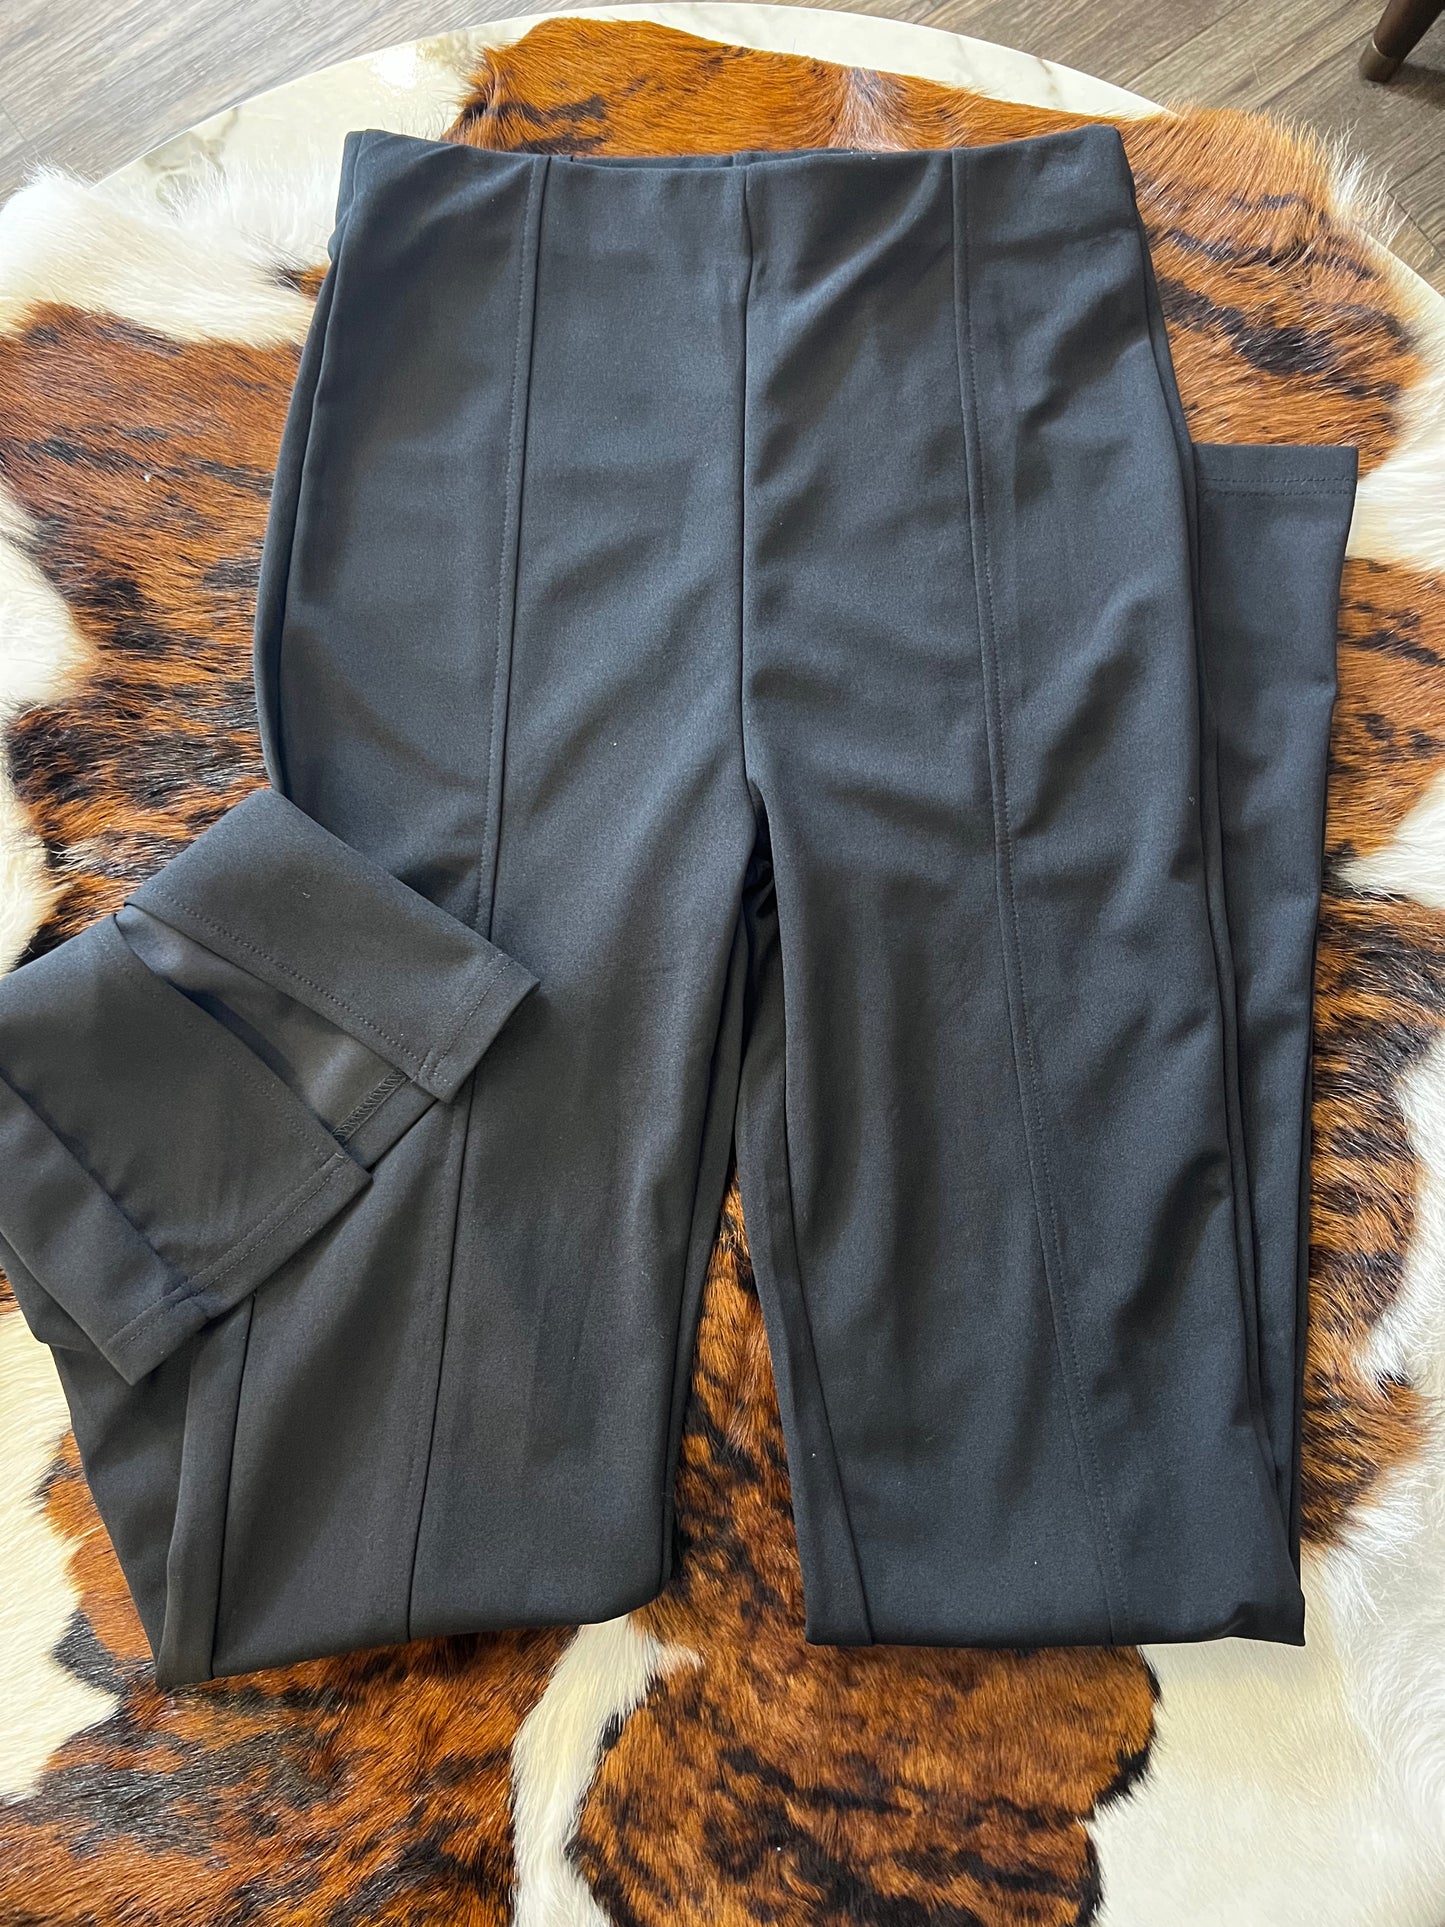 Split Bottom Hem Black Dress Pants